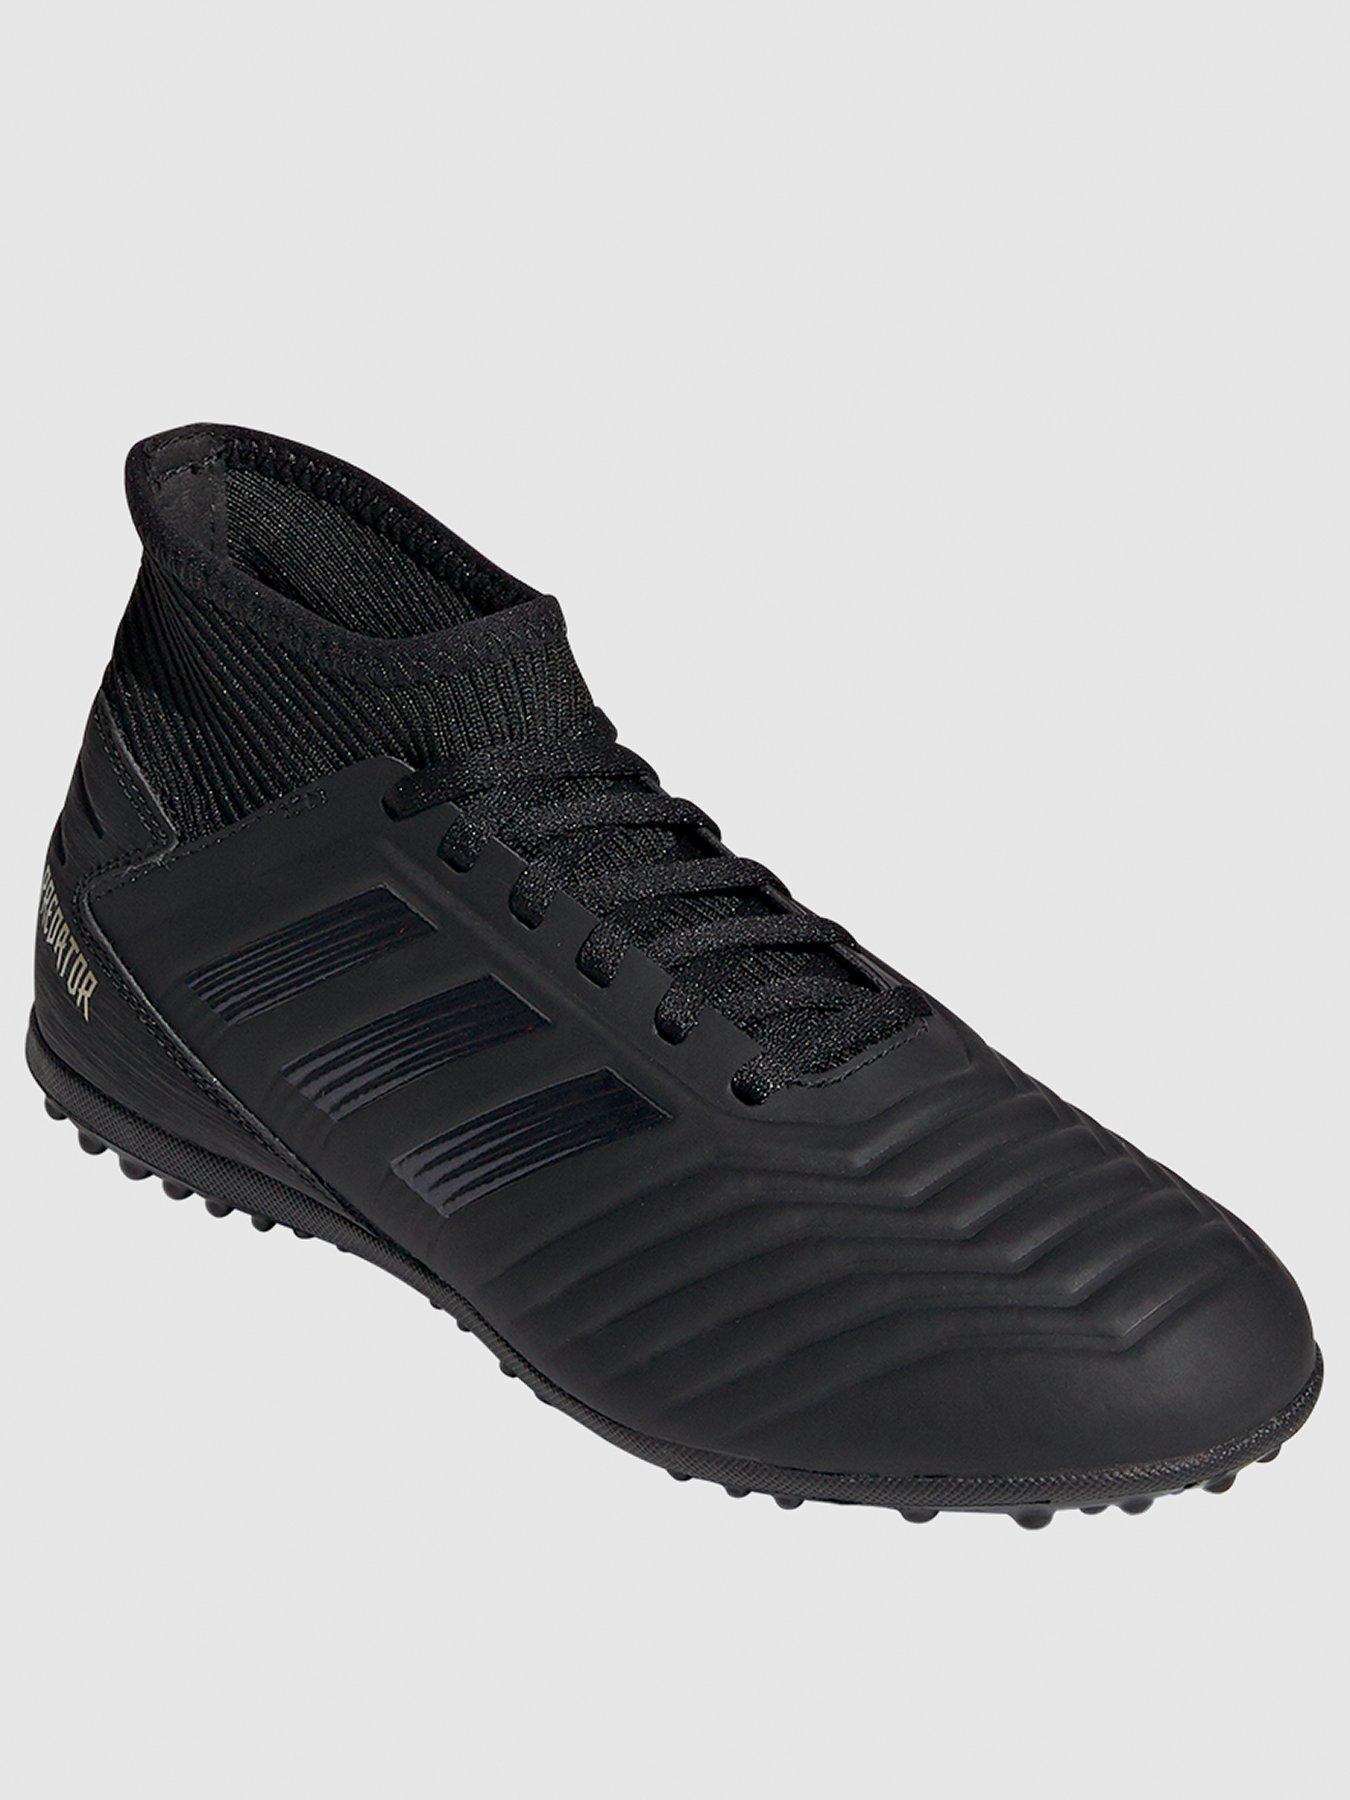 adidas predator trainers black